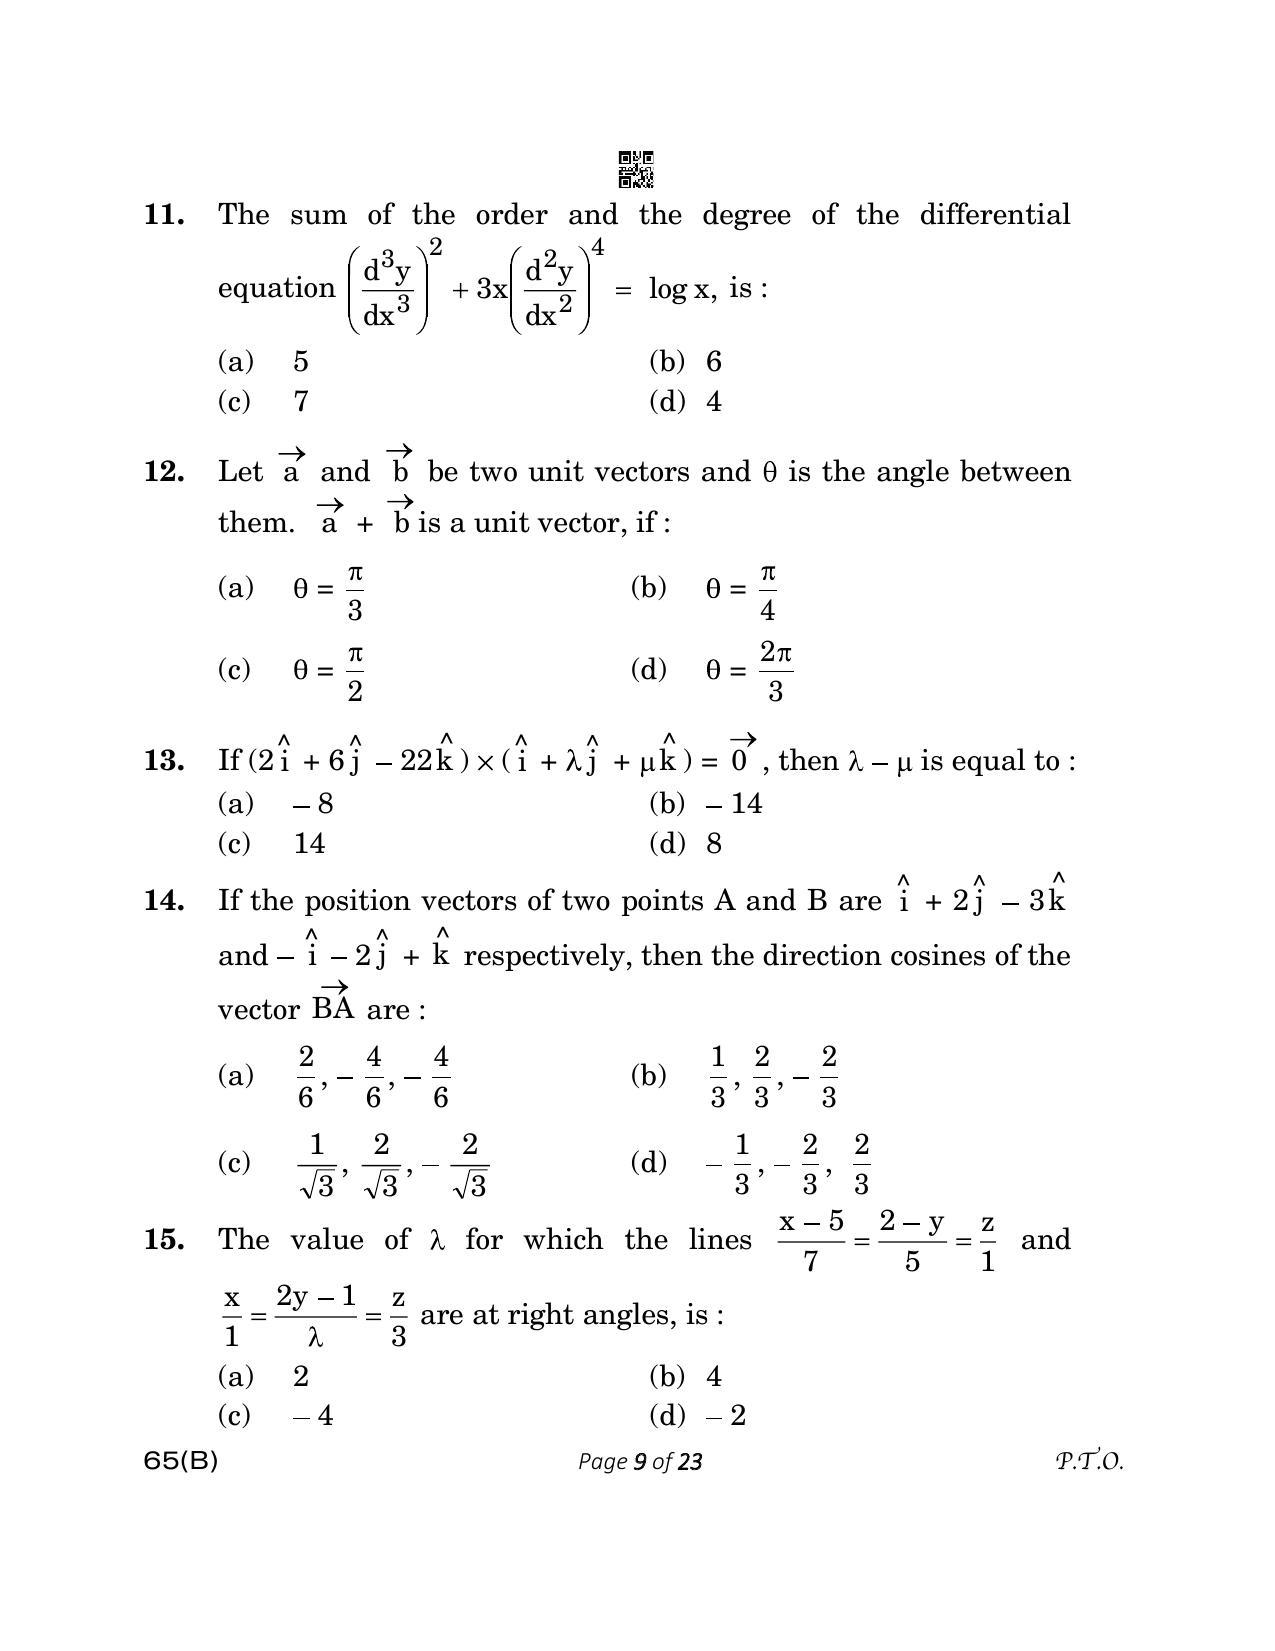 CBSE Class 12 65(B) MATHEMATICS FOR VI 2023 Question Paper - Page 9